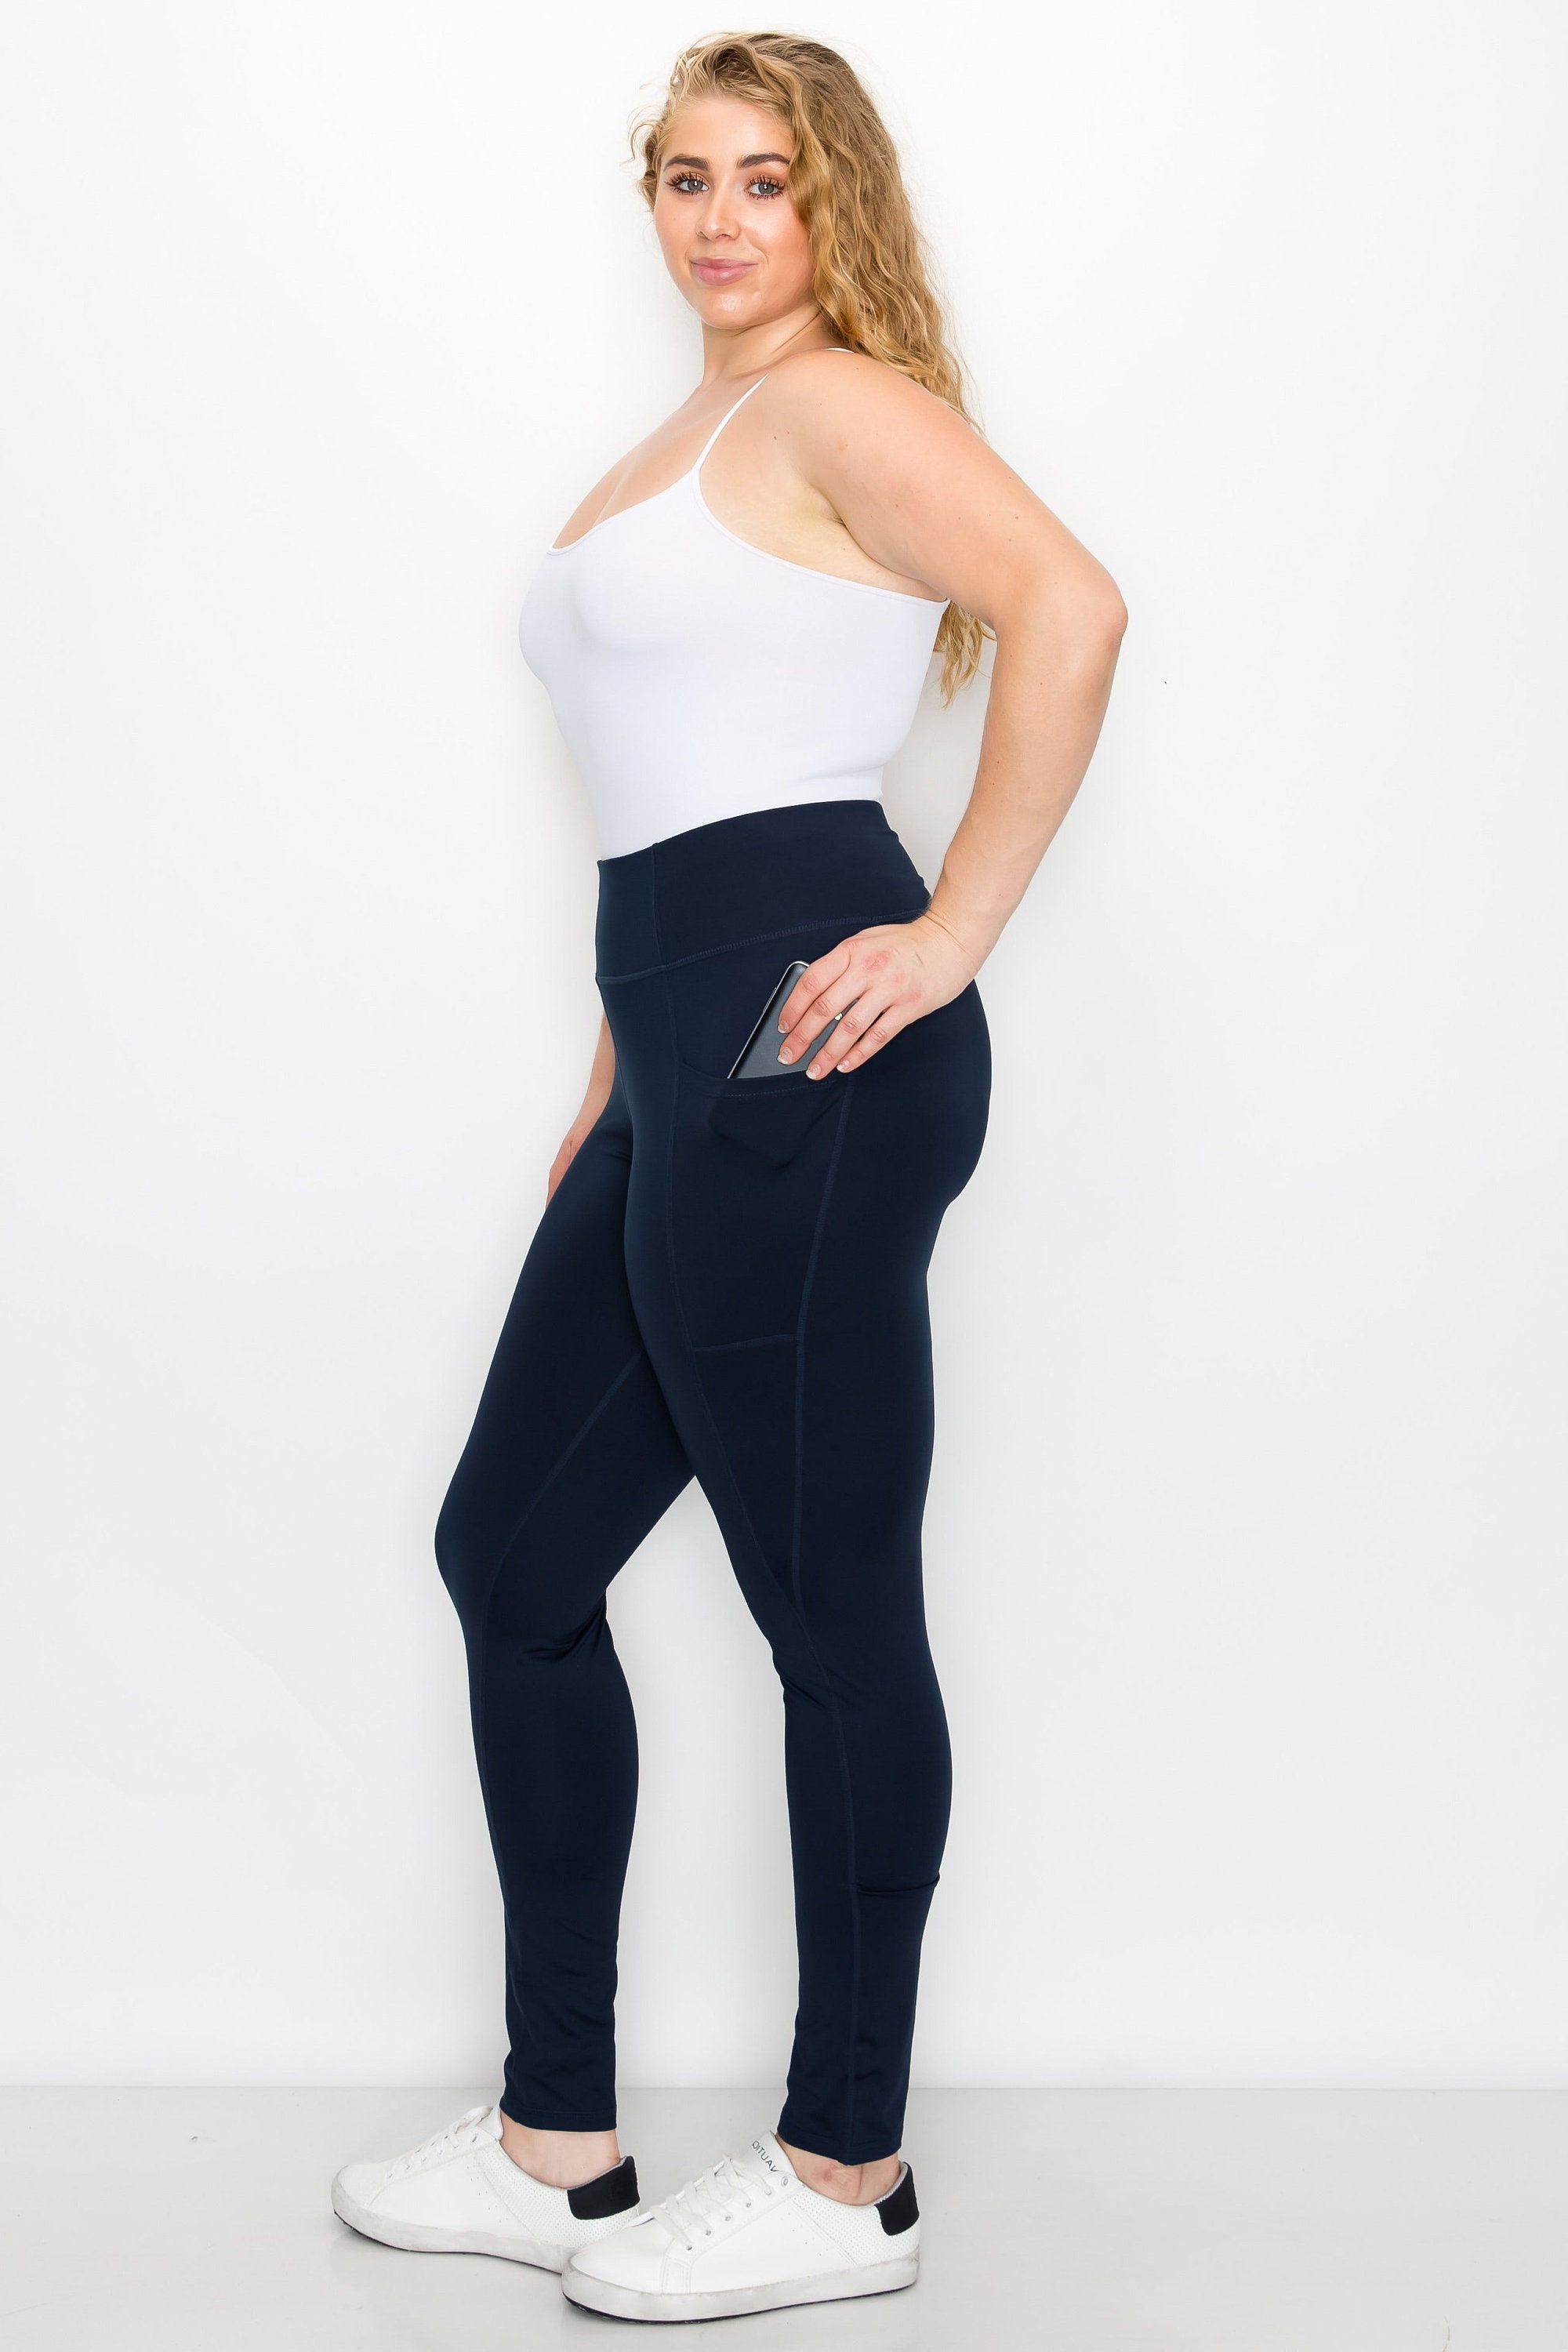 yoga pants with inner pocket & round stitch - P1080 – Yogalandusa